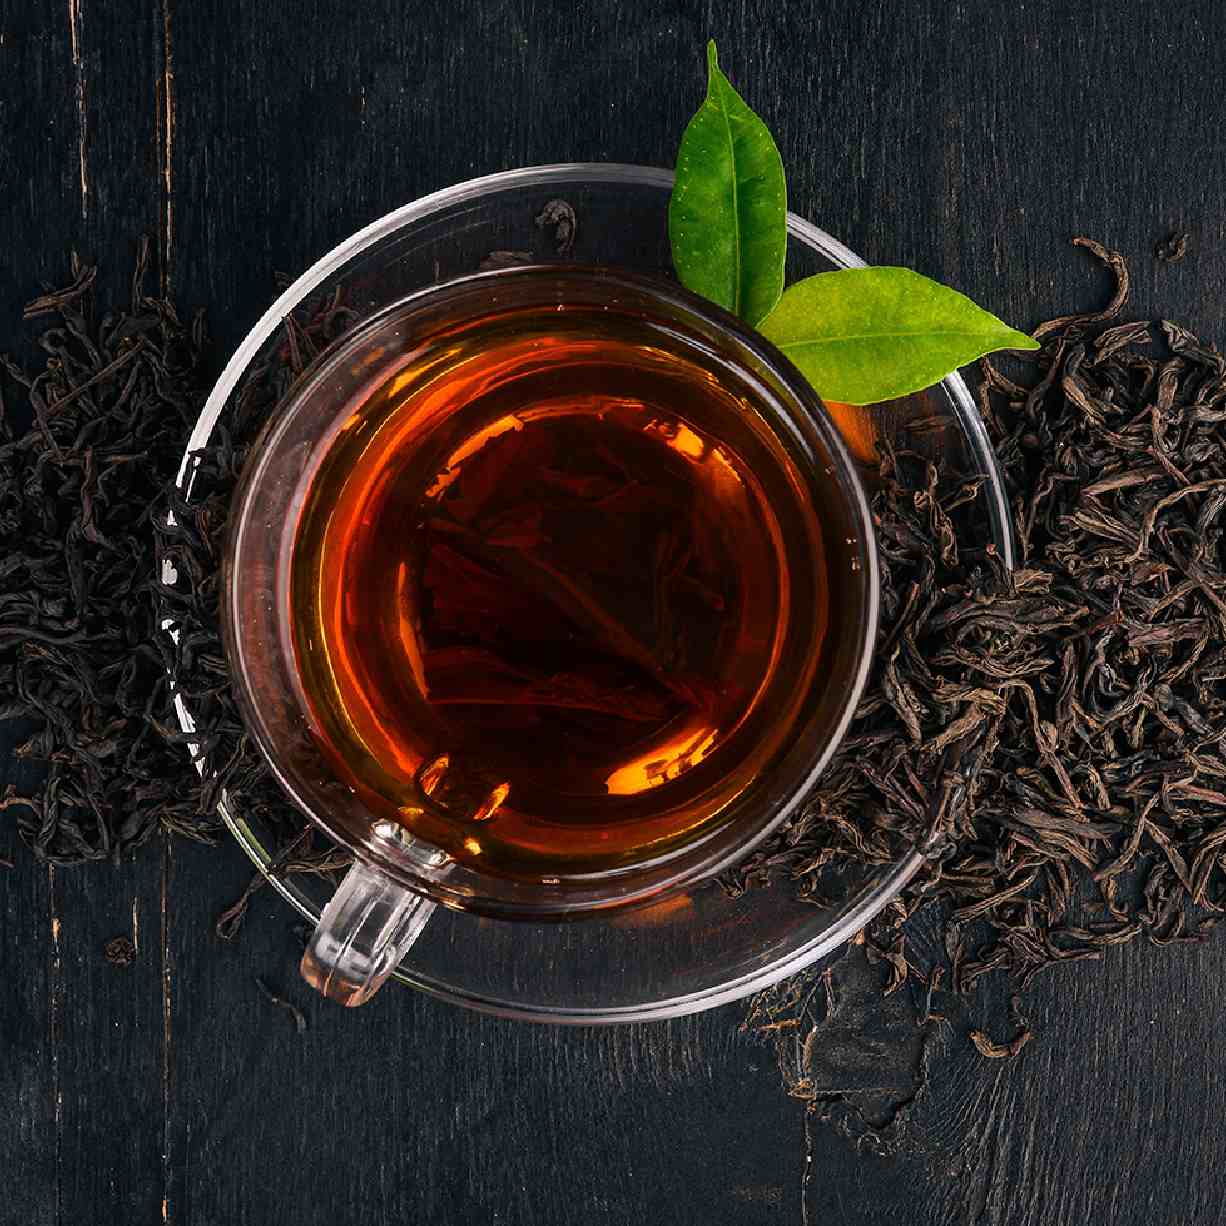 چای ، خرید چای ، چای ایرانی ، چای خارجی ، چای سبز ، چای سیاه ، چای به ، چای سیب ، چای ترش ، چای ماسالا